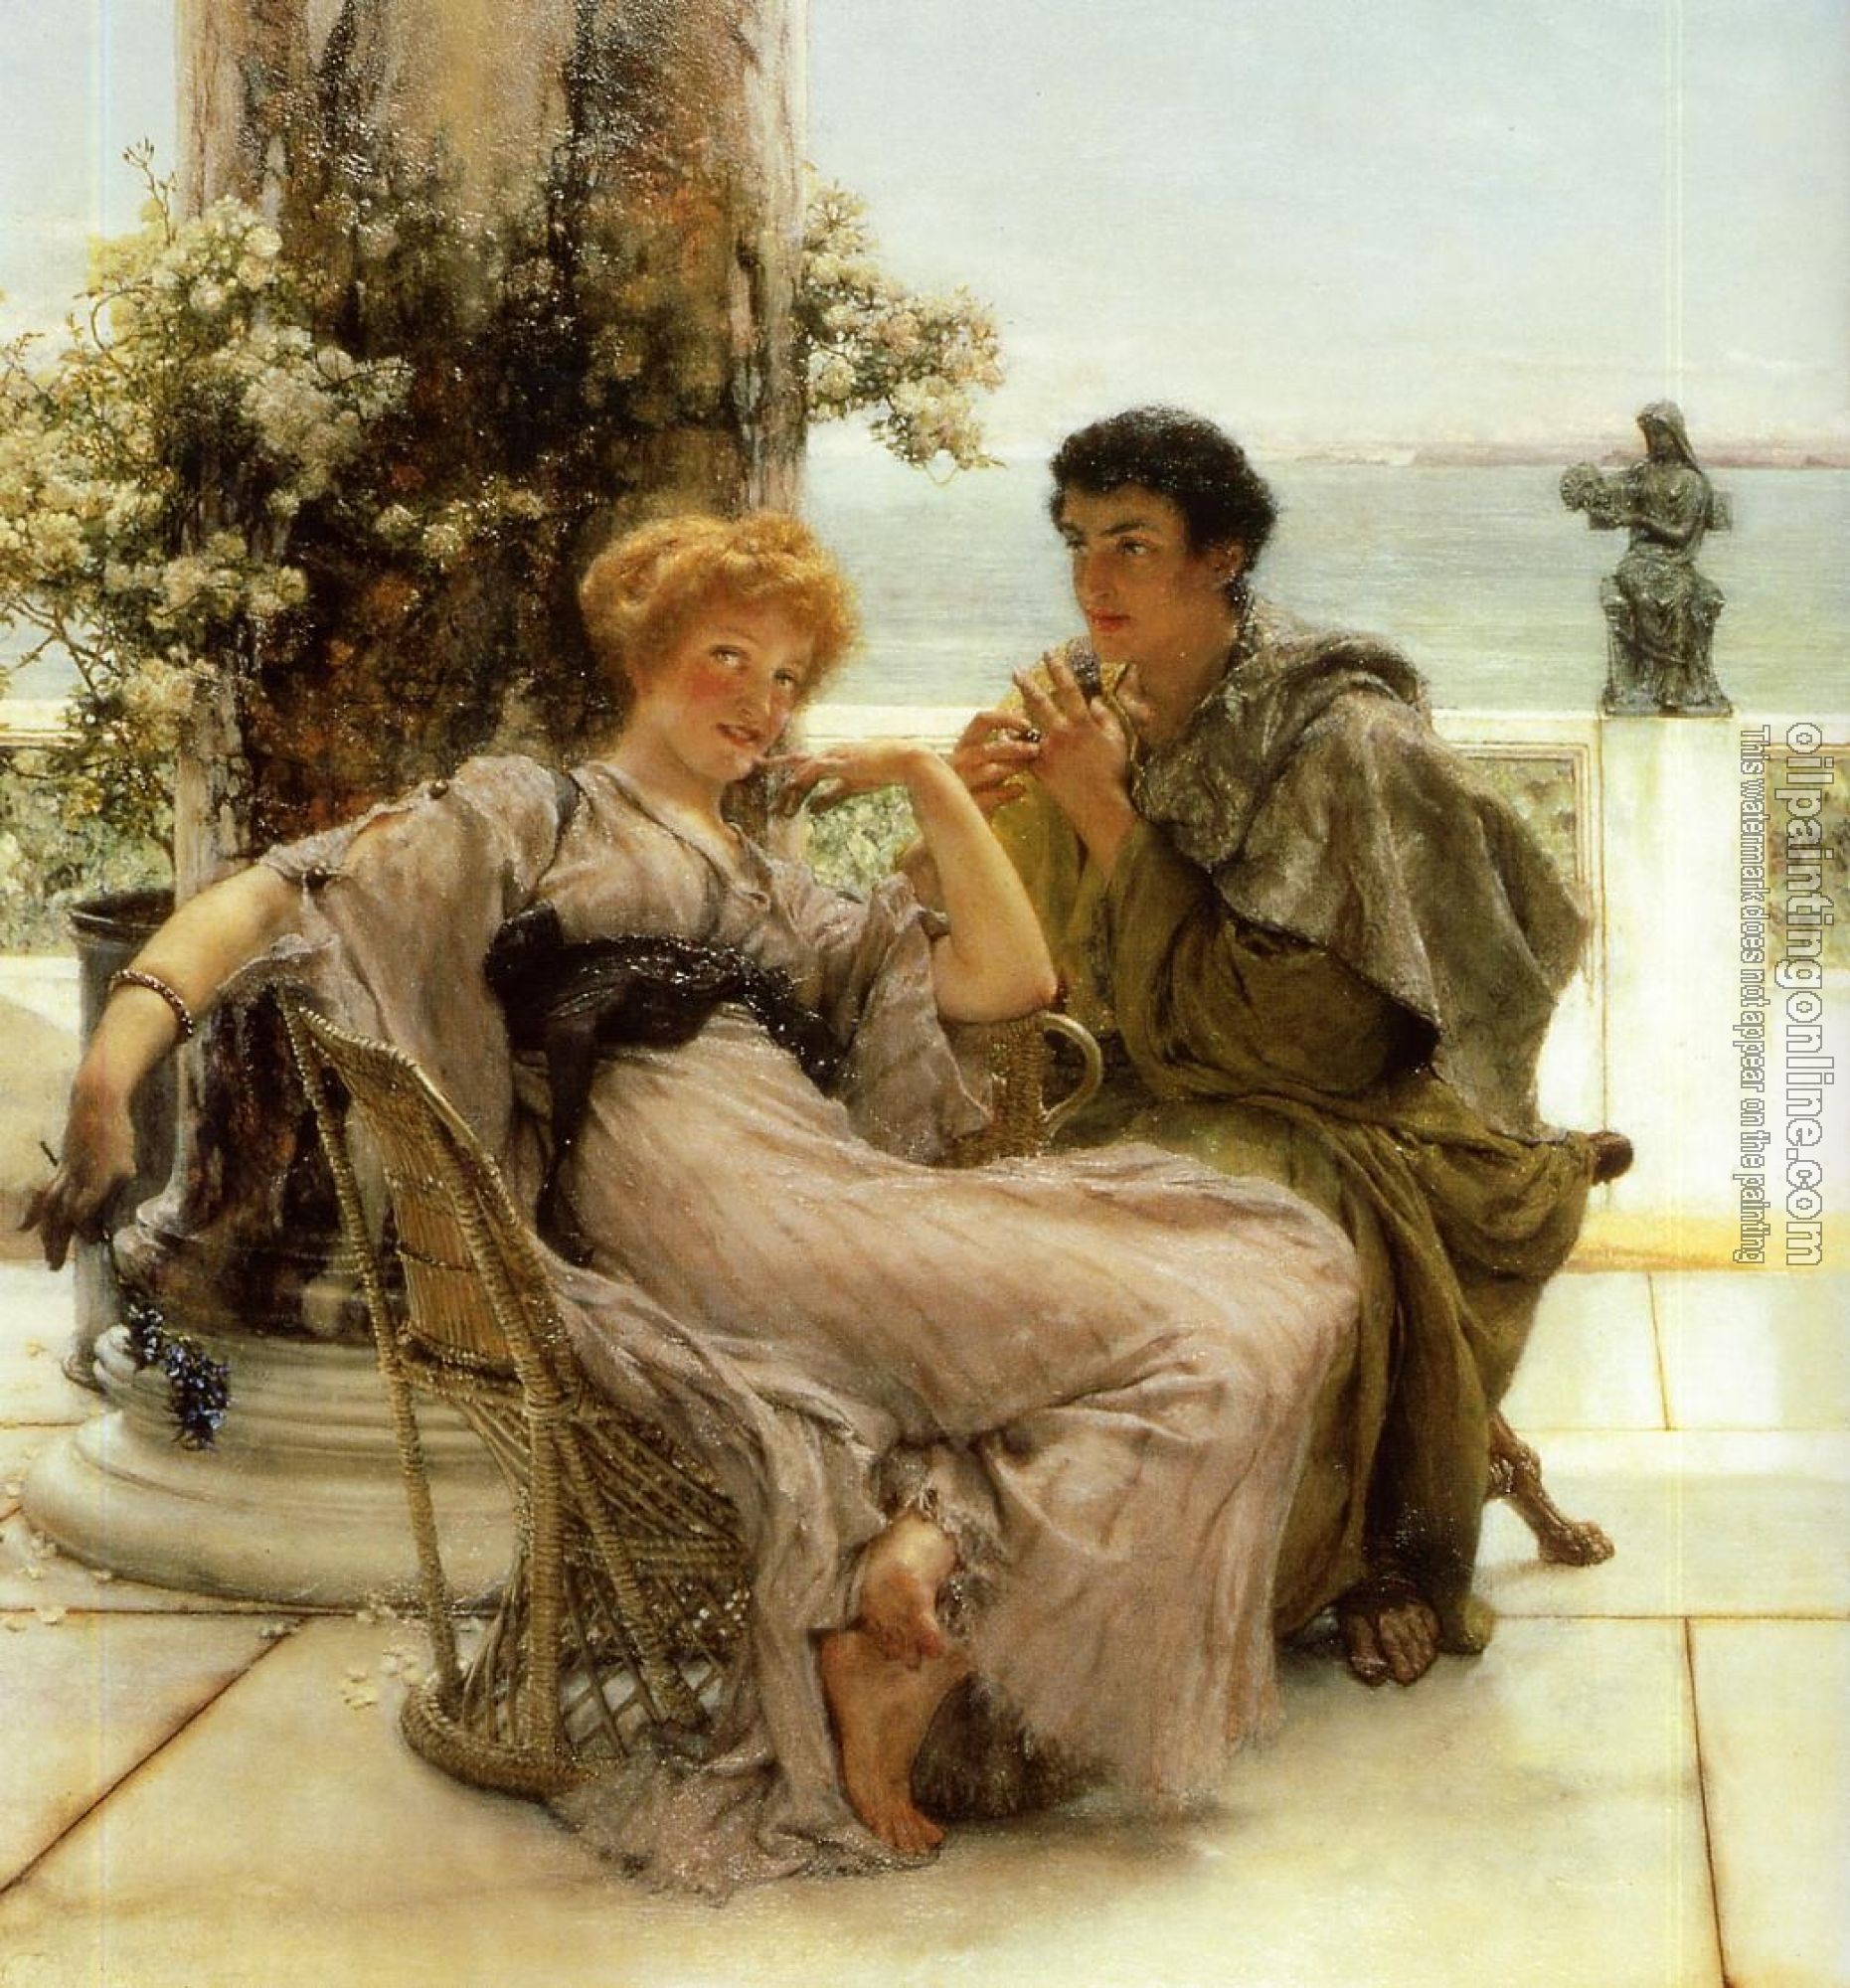 Alma-Tadema, Sir Lawrence - Courtship, The Proposal